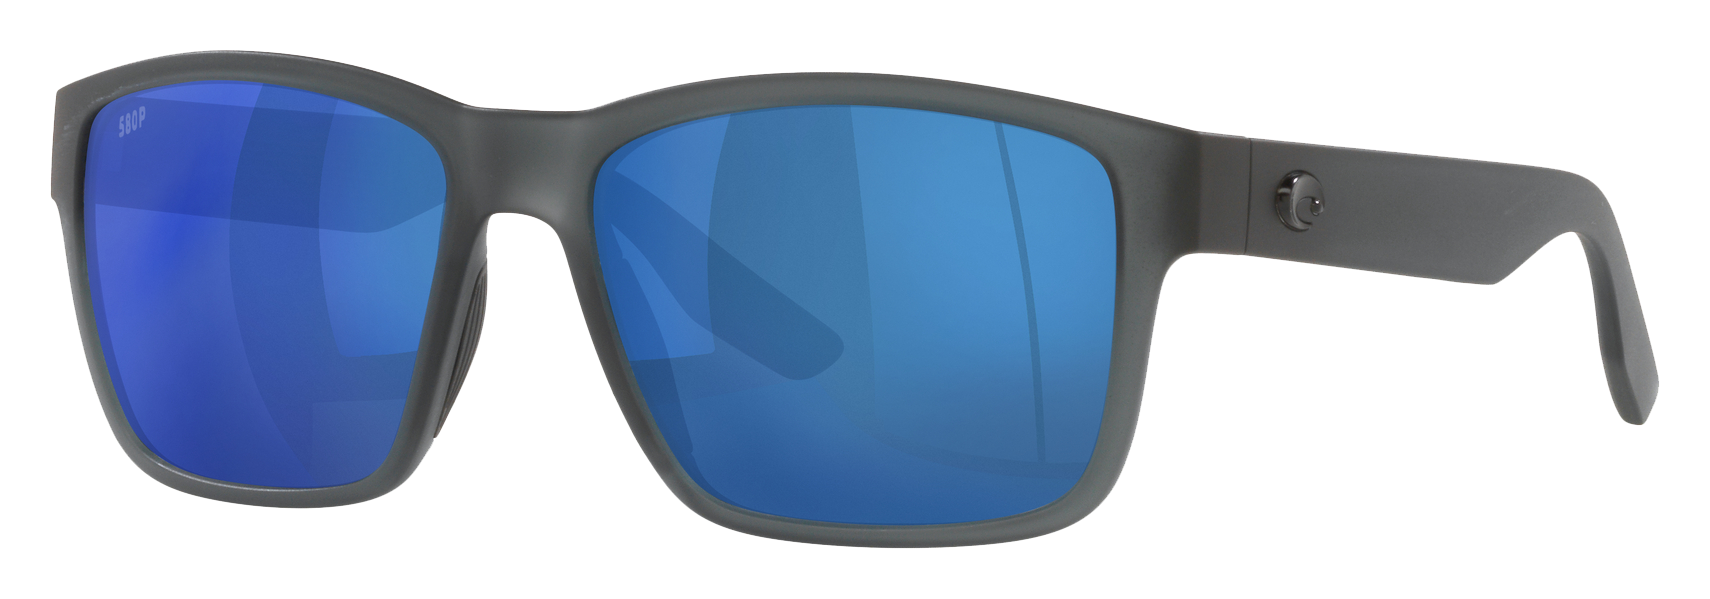 Costa Del Mar Paunch 580P Polarized Sunglasses - Blue Mirror/Matte Smoke Crystal - Large